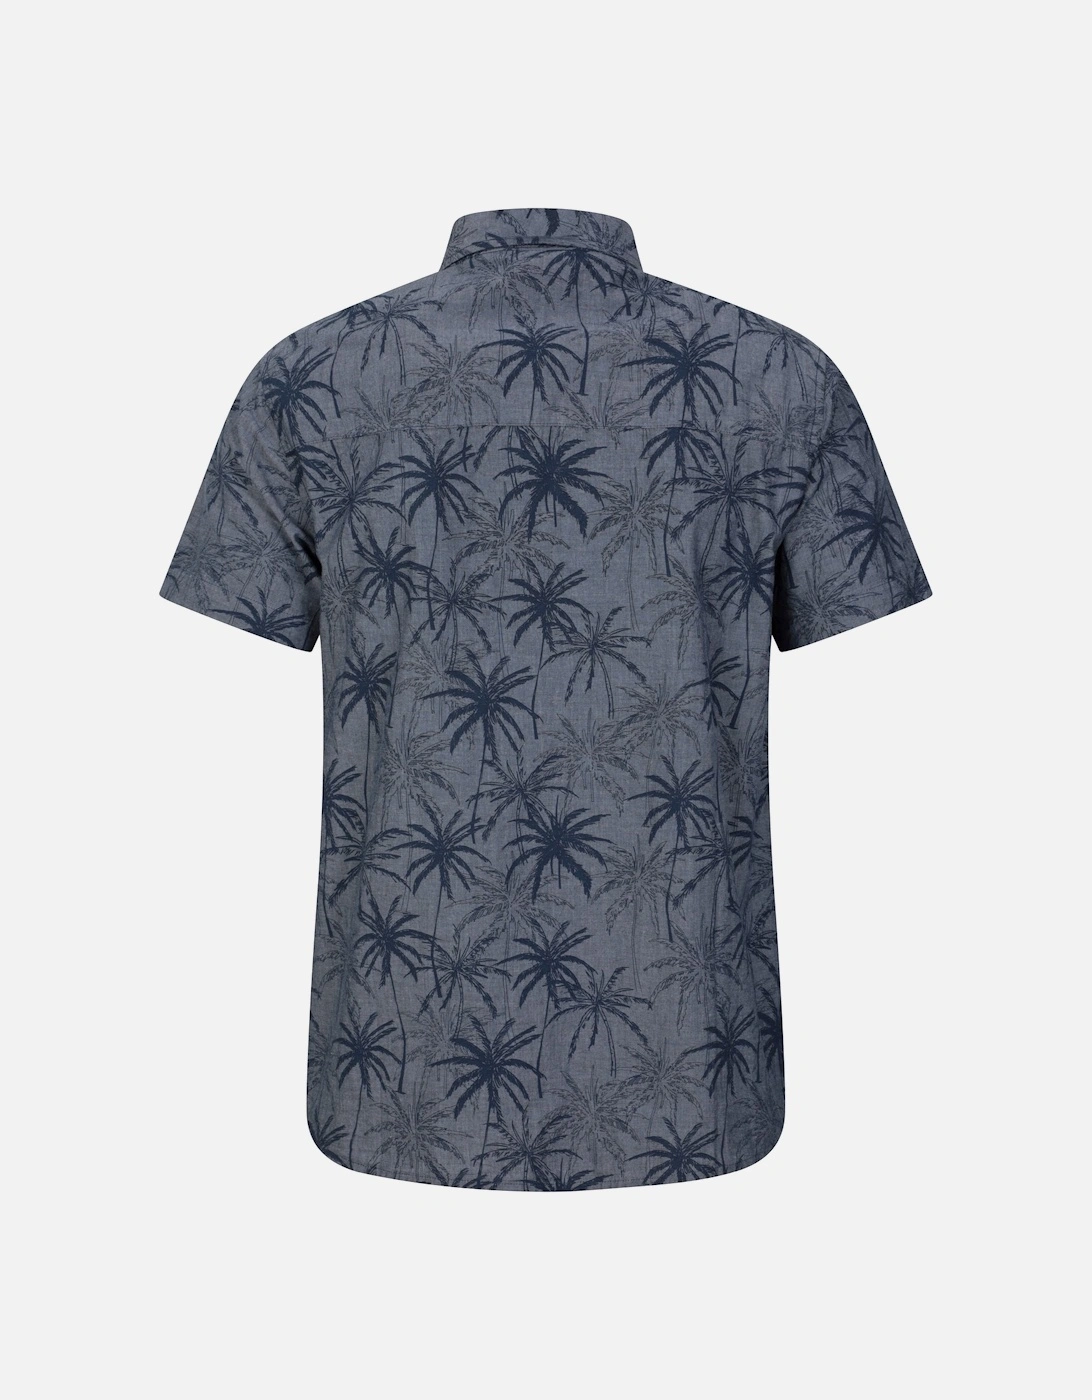 Mens Tropical Palm Tree Shirt